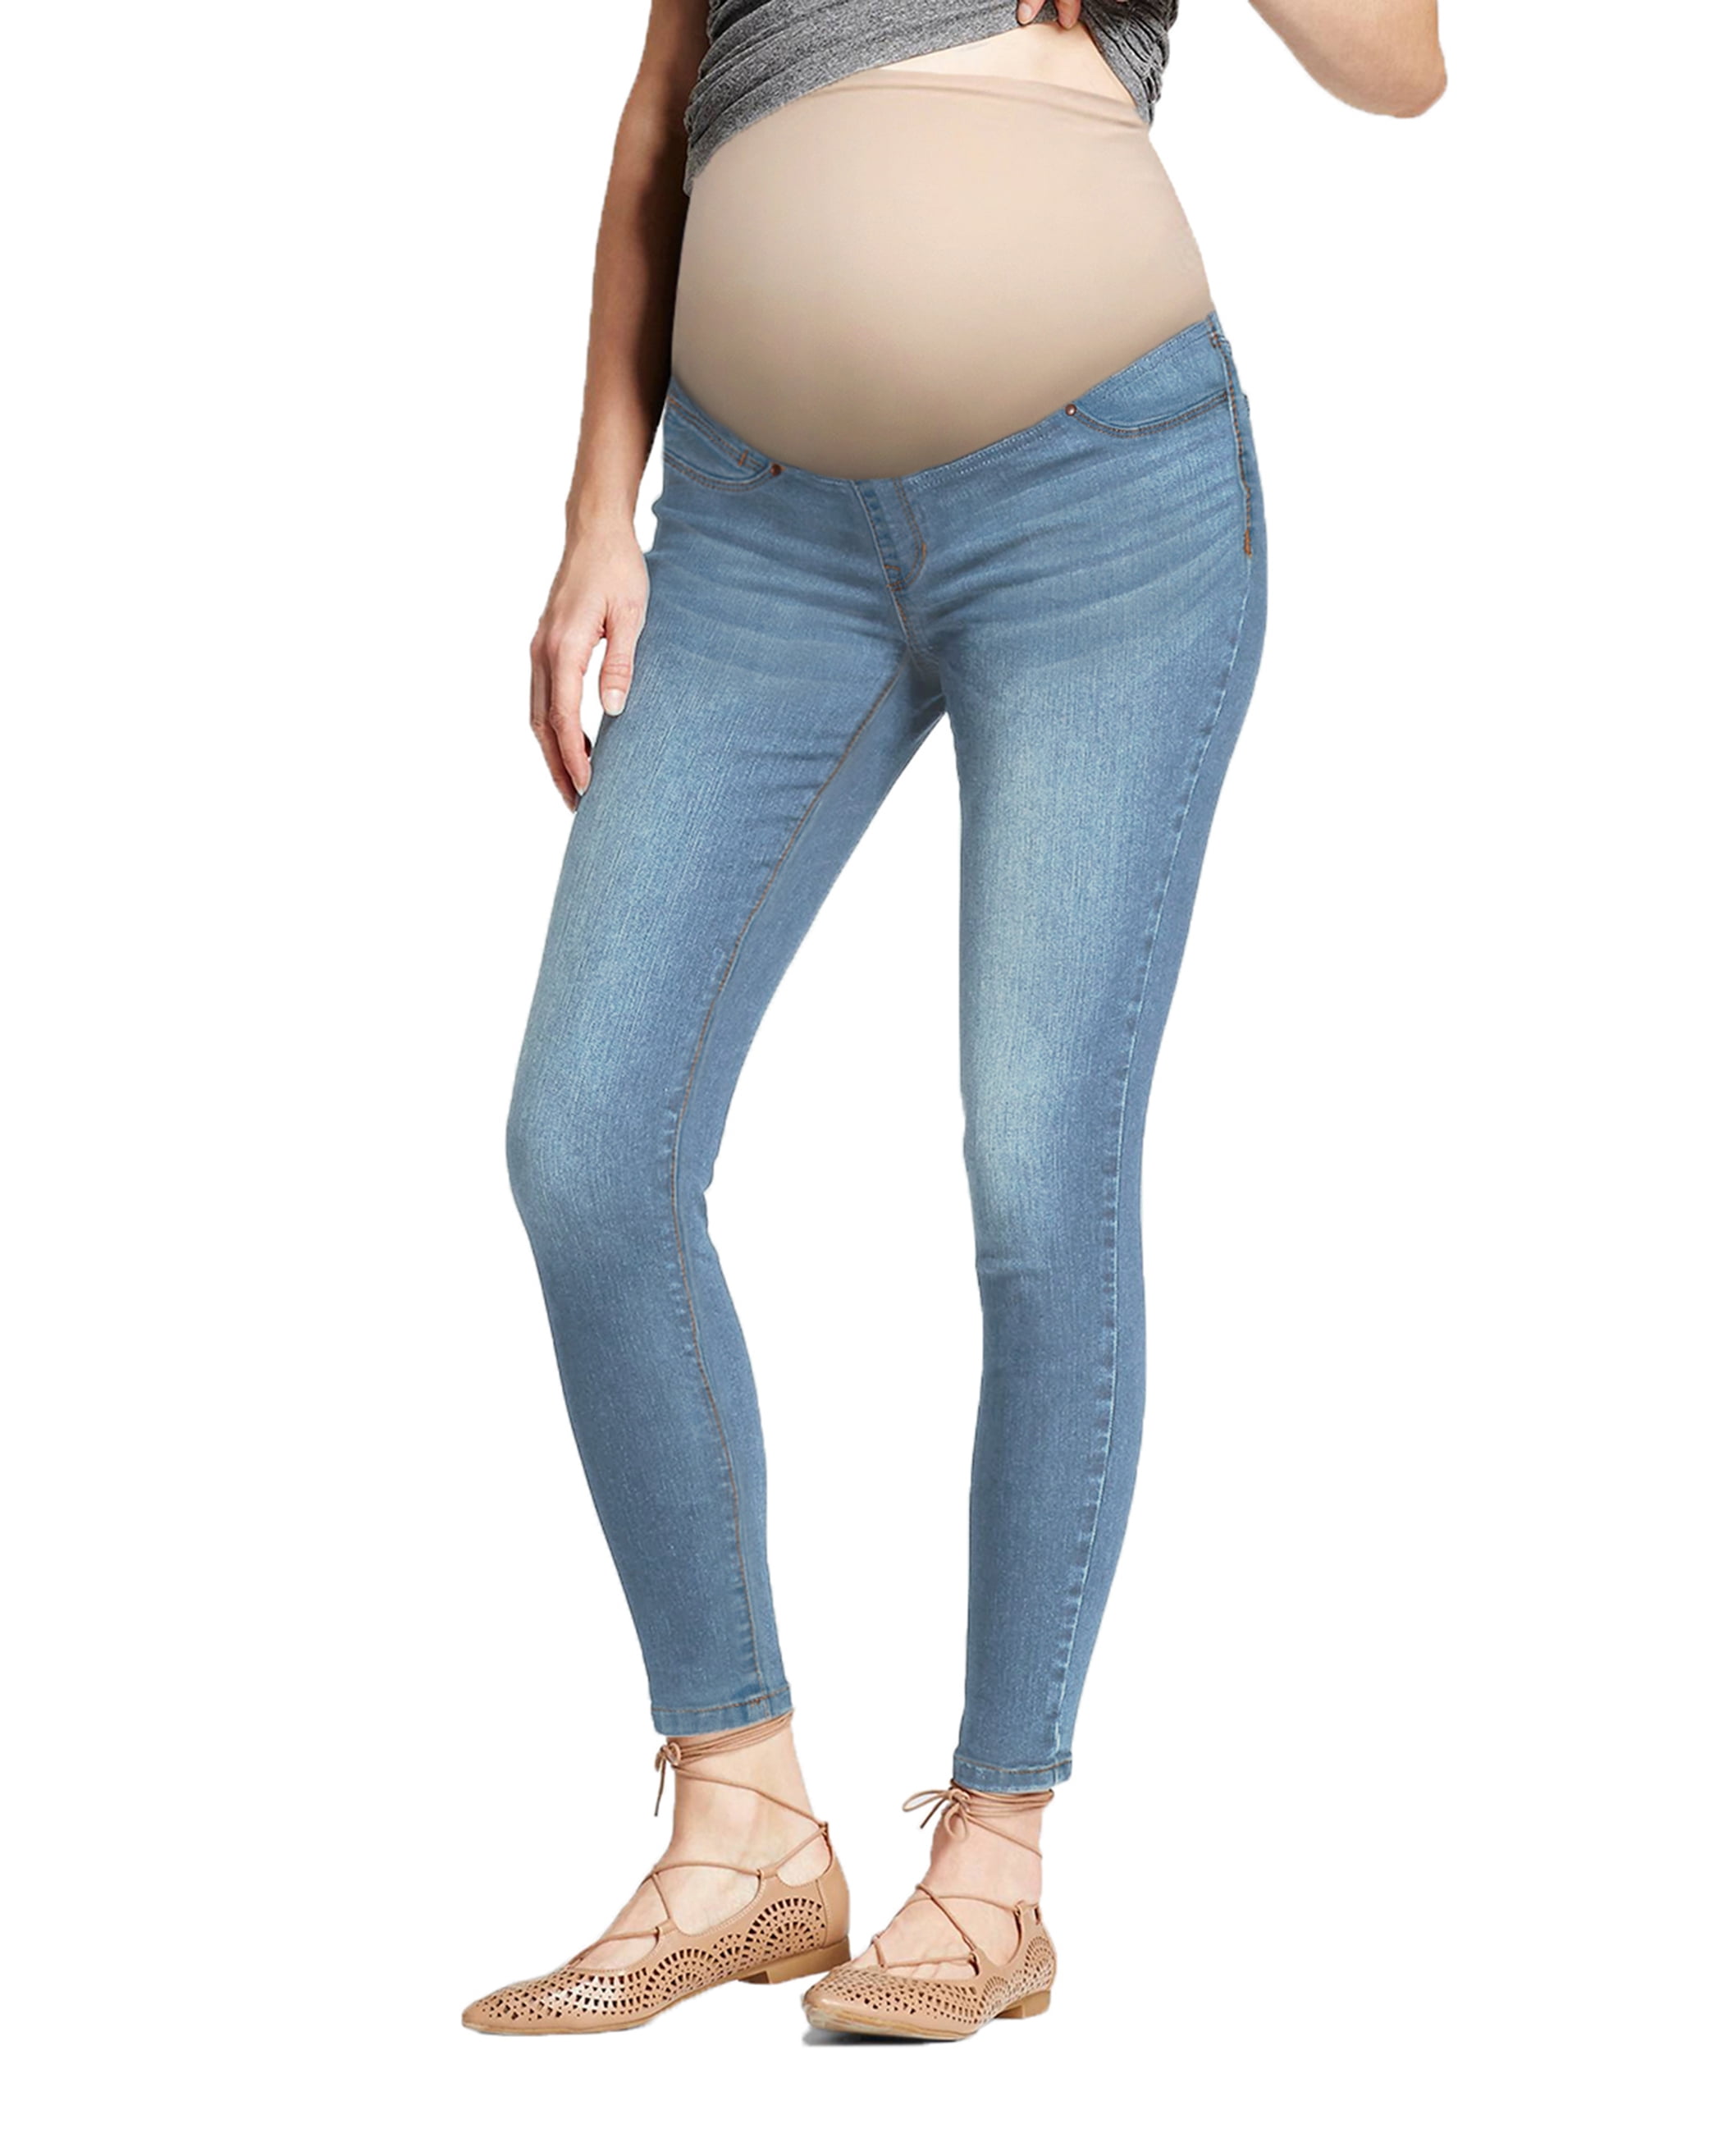 Ladies High Waisted Skinny stretchy Tube Jeans Jegging 4-16 UK size